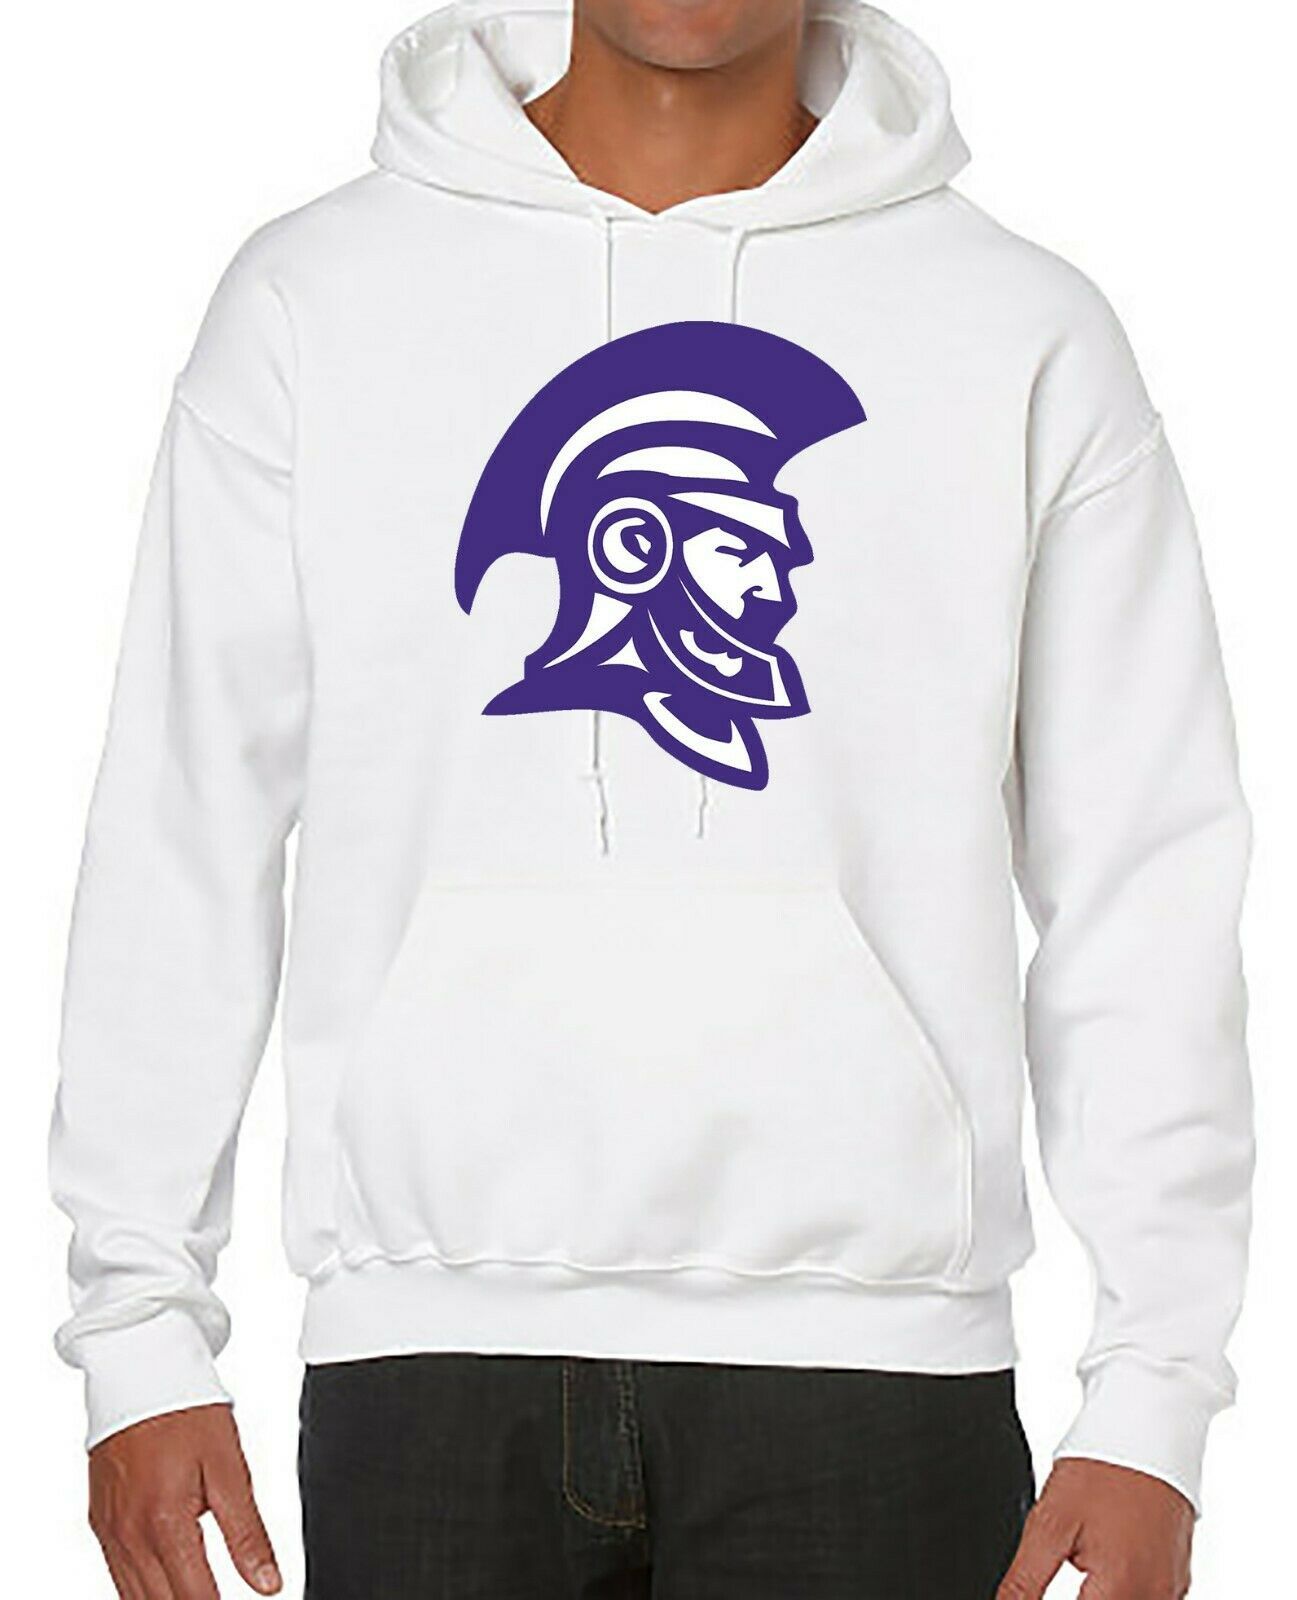 NCAA Basketball team hoodie - sweater with Trevecca Nazare logo ...